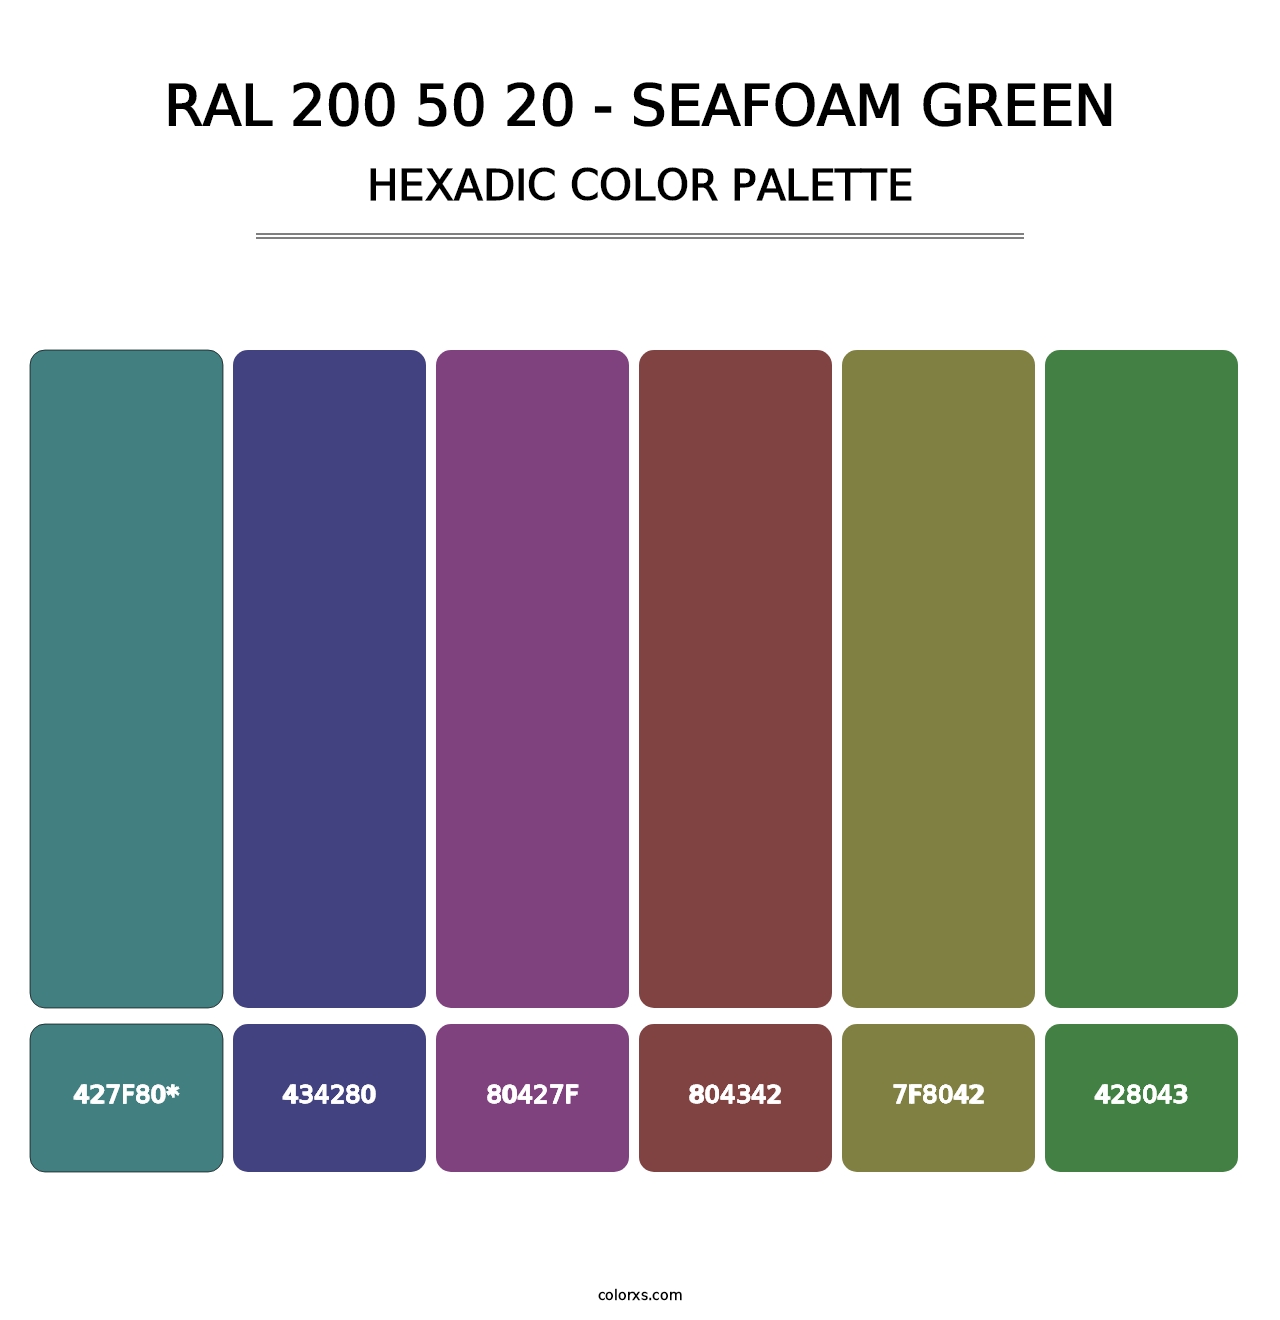 RAL 200 50 20 - Seafoam Green - Hexadic Color Palette